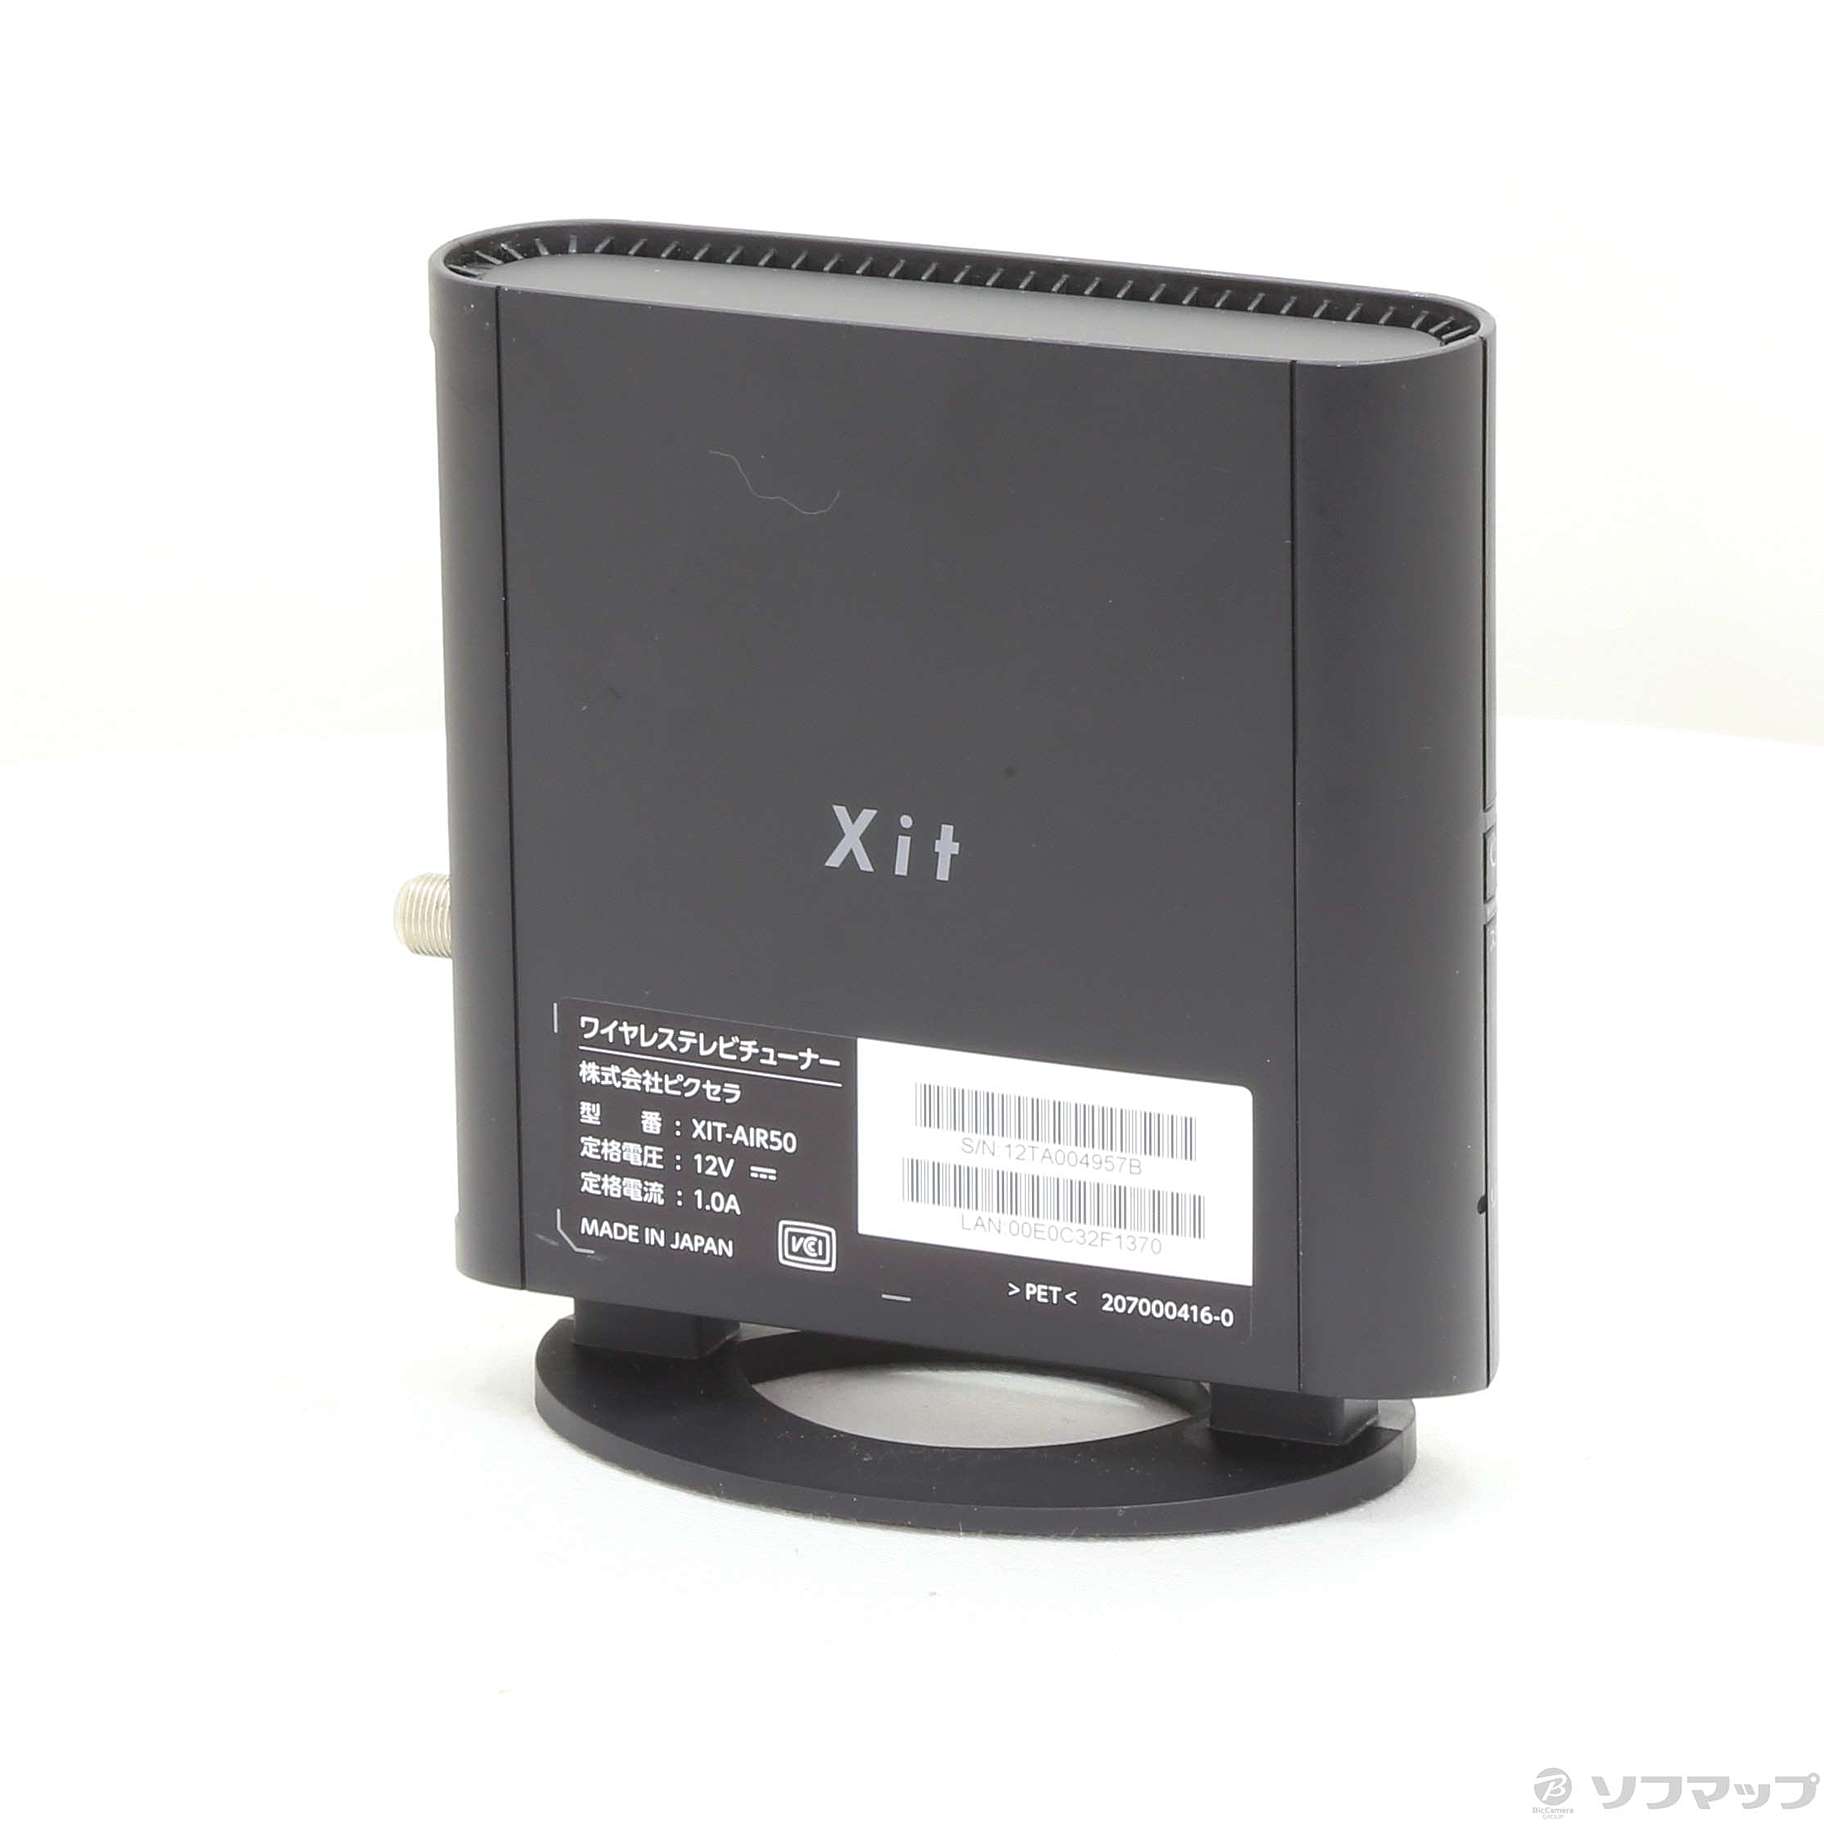 Xit AirBox lite XIT-AIR50